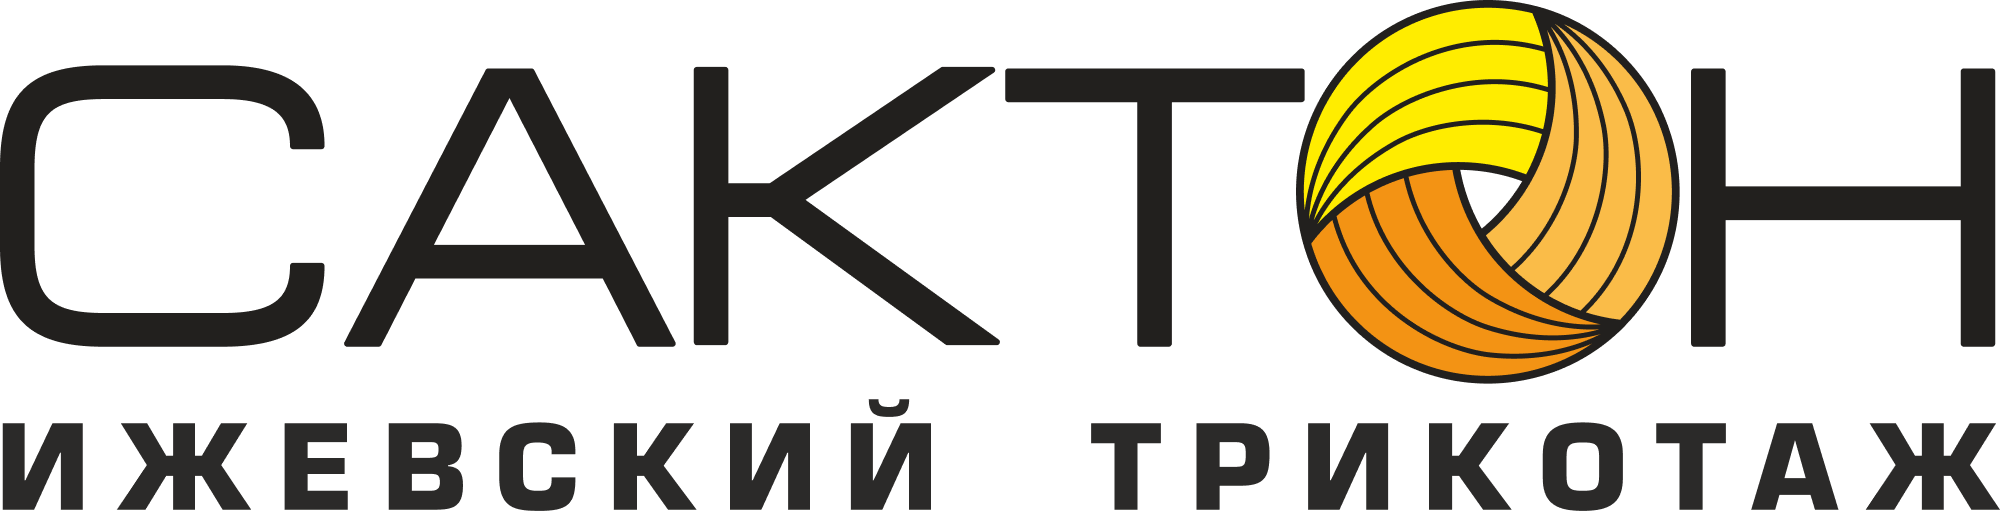 Сактон логотип. Предприятие Сактон Ижевск. Трикотаж фабрики Сактон. Логотипы трикотажных фабрик.